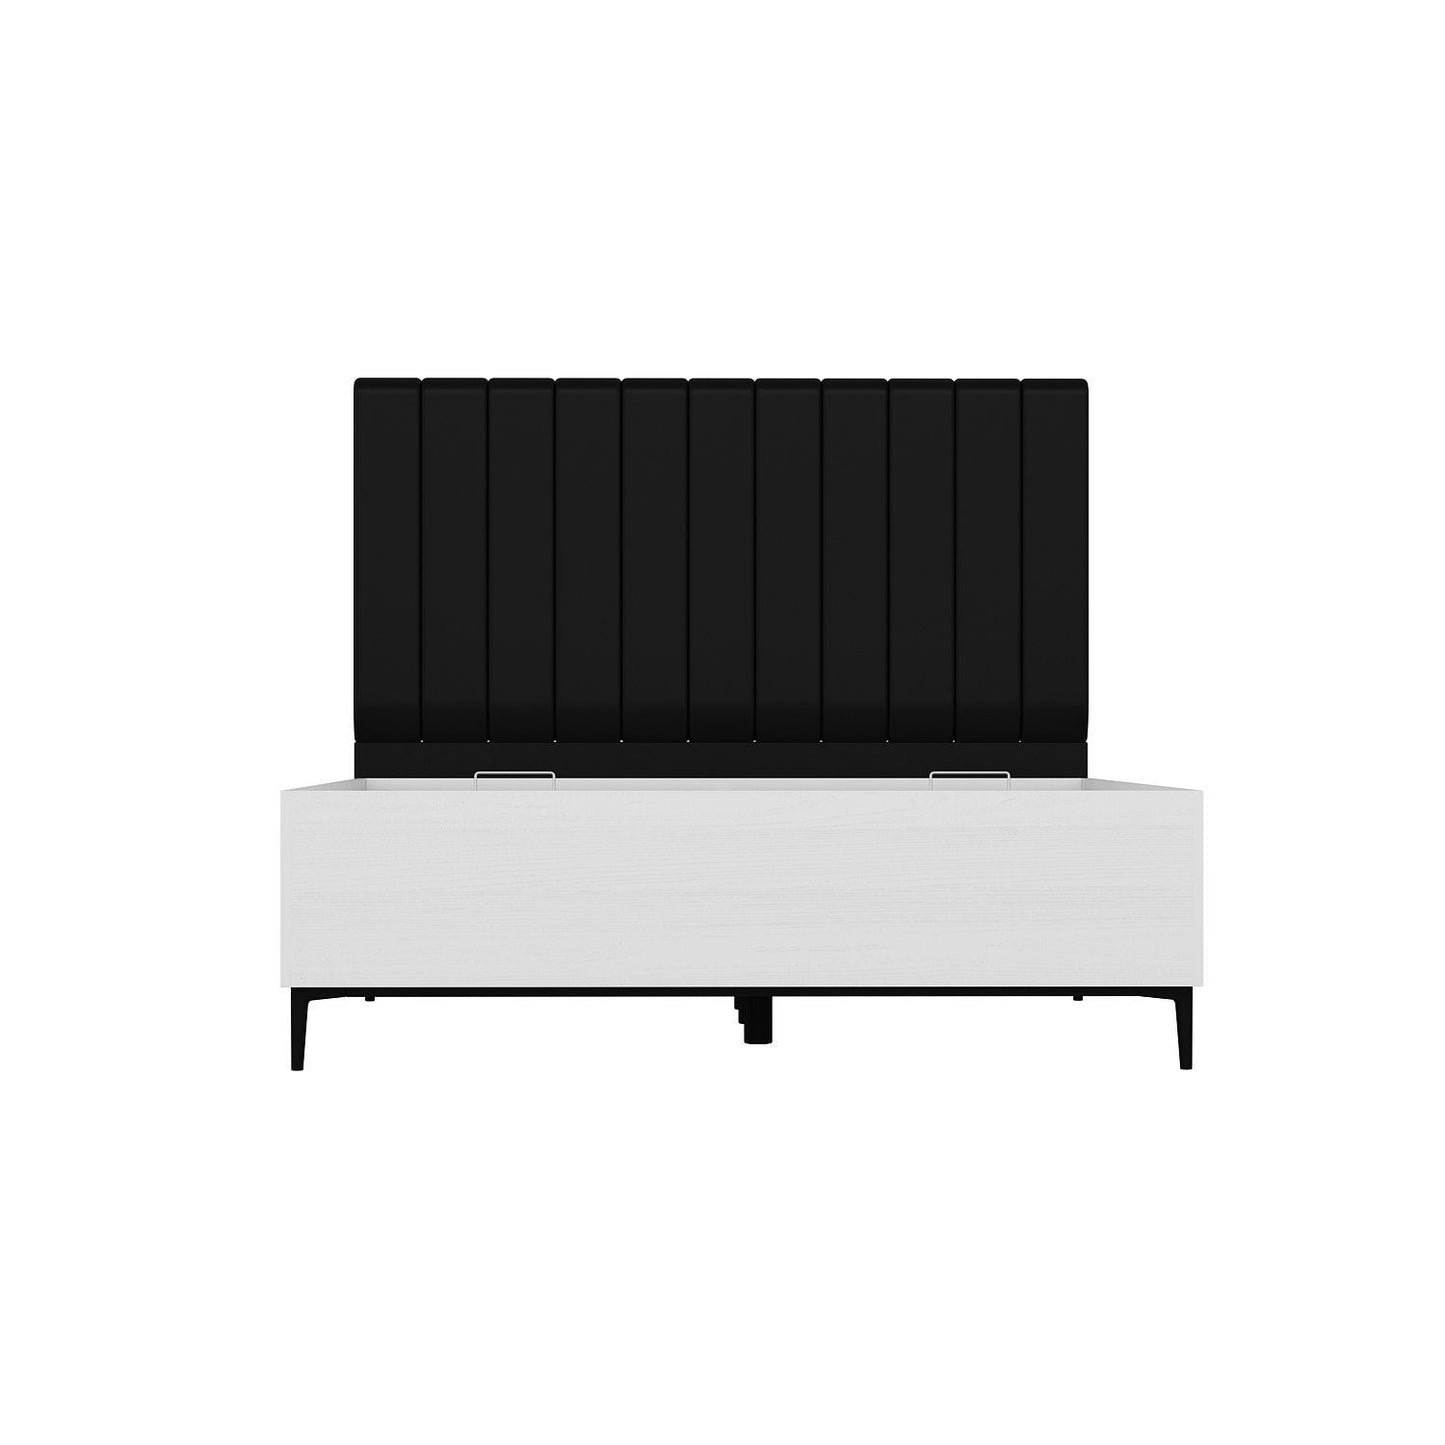 Elevate 160 x 200 - White - Double Bed Base & Headboard